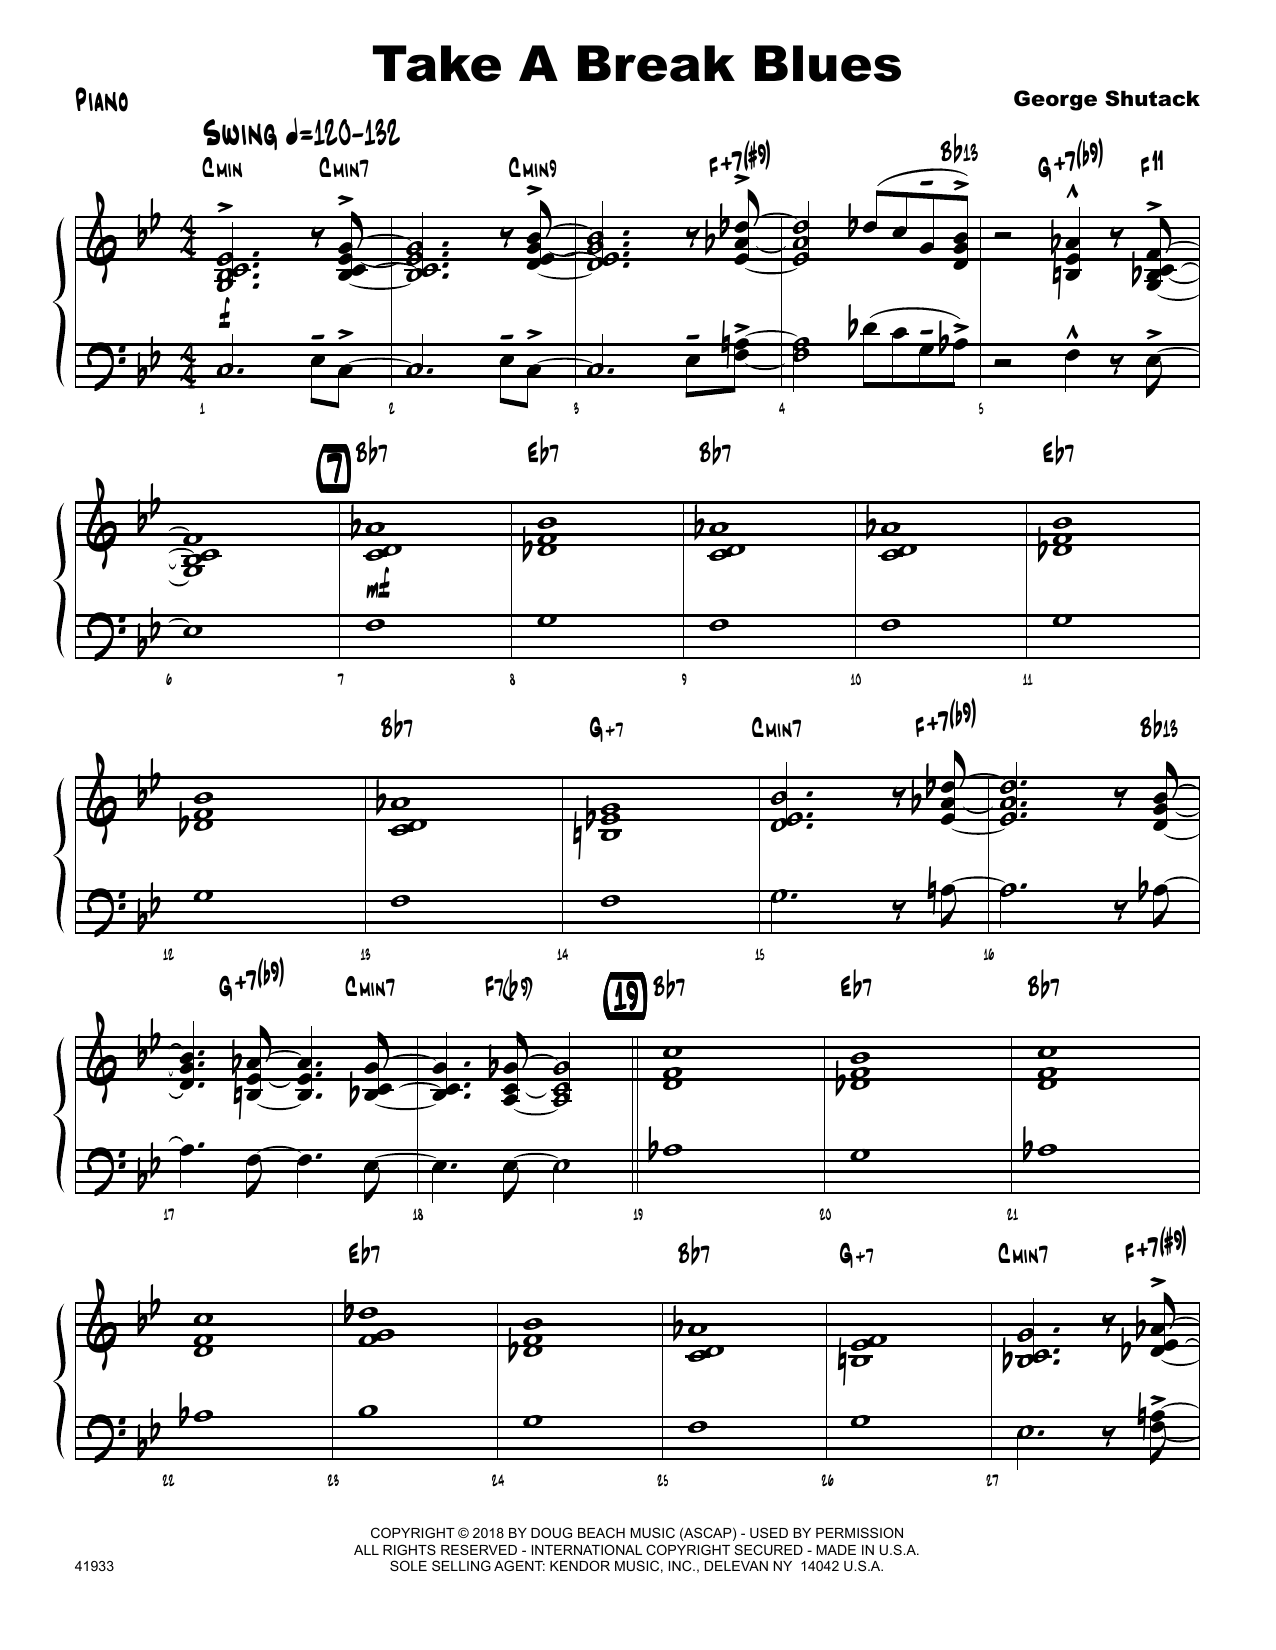 Download George Shutack Take A Break Blues - Piano Sheet Music